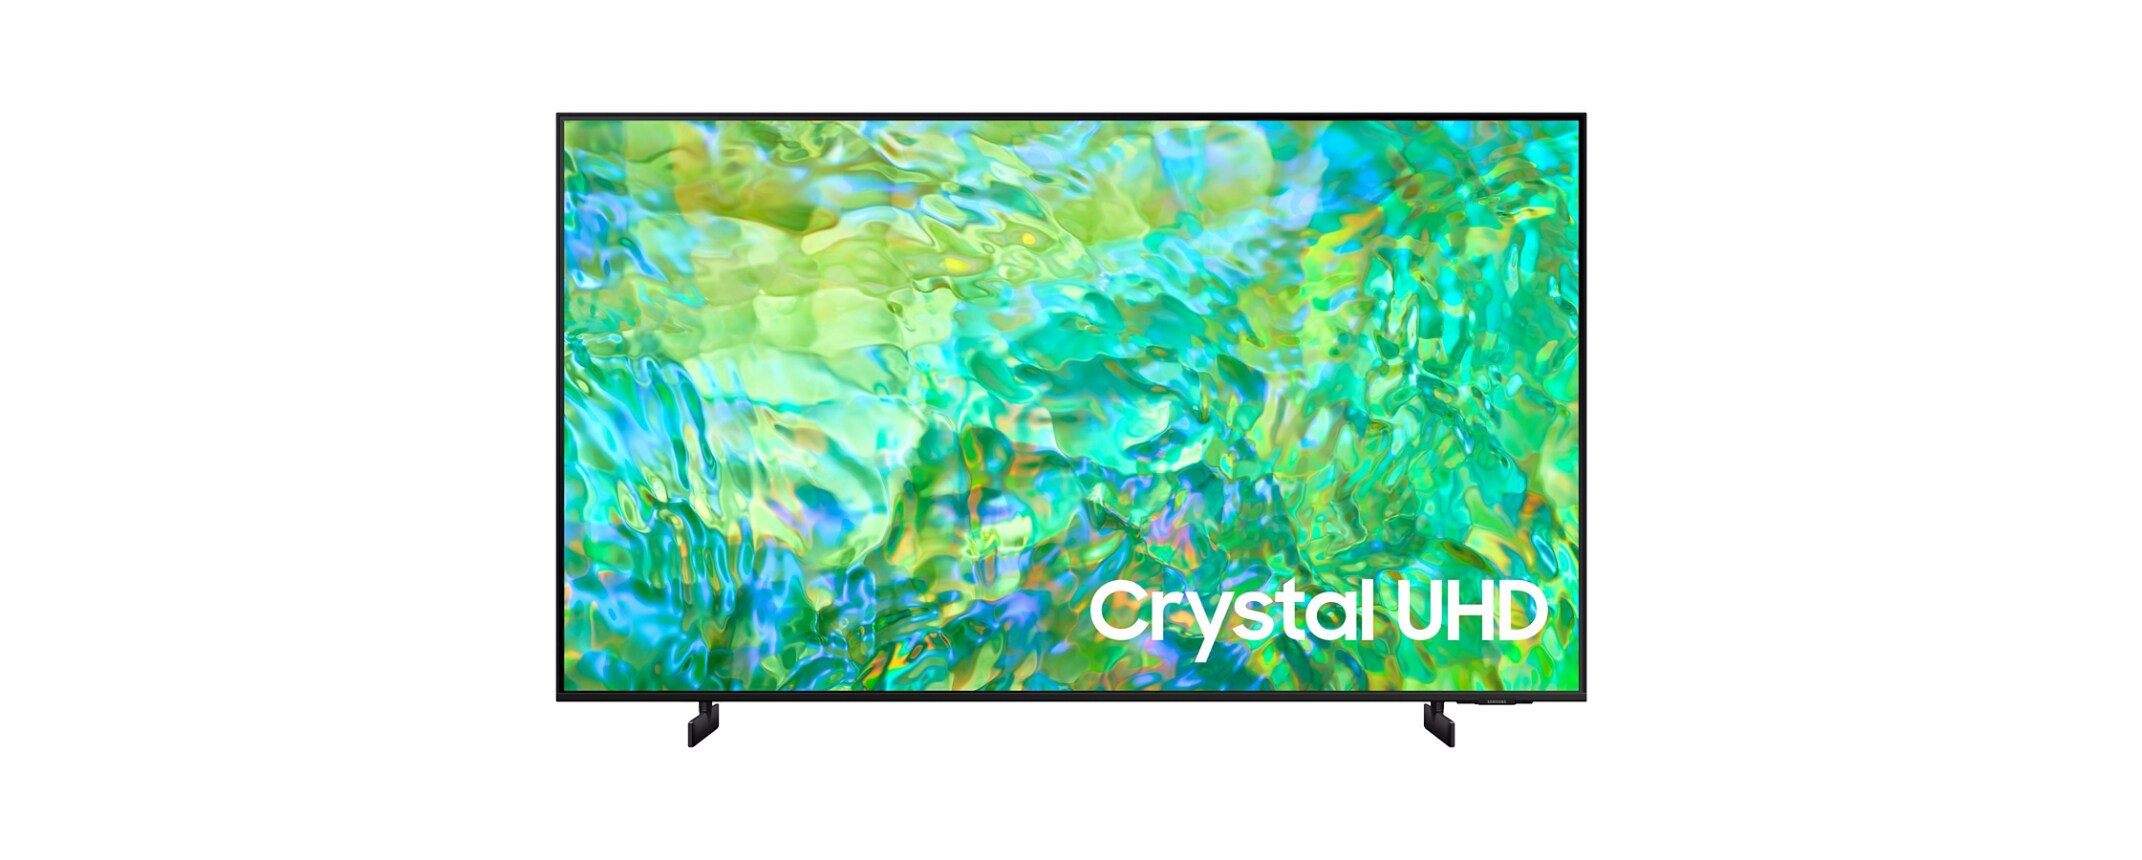 Samsung Series - 43" Class (42.5" viewable) LED-backlit LCD TV - Crystal UHD - 4K - $285